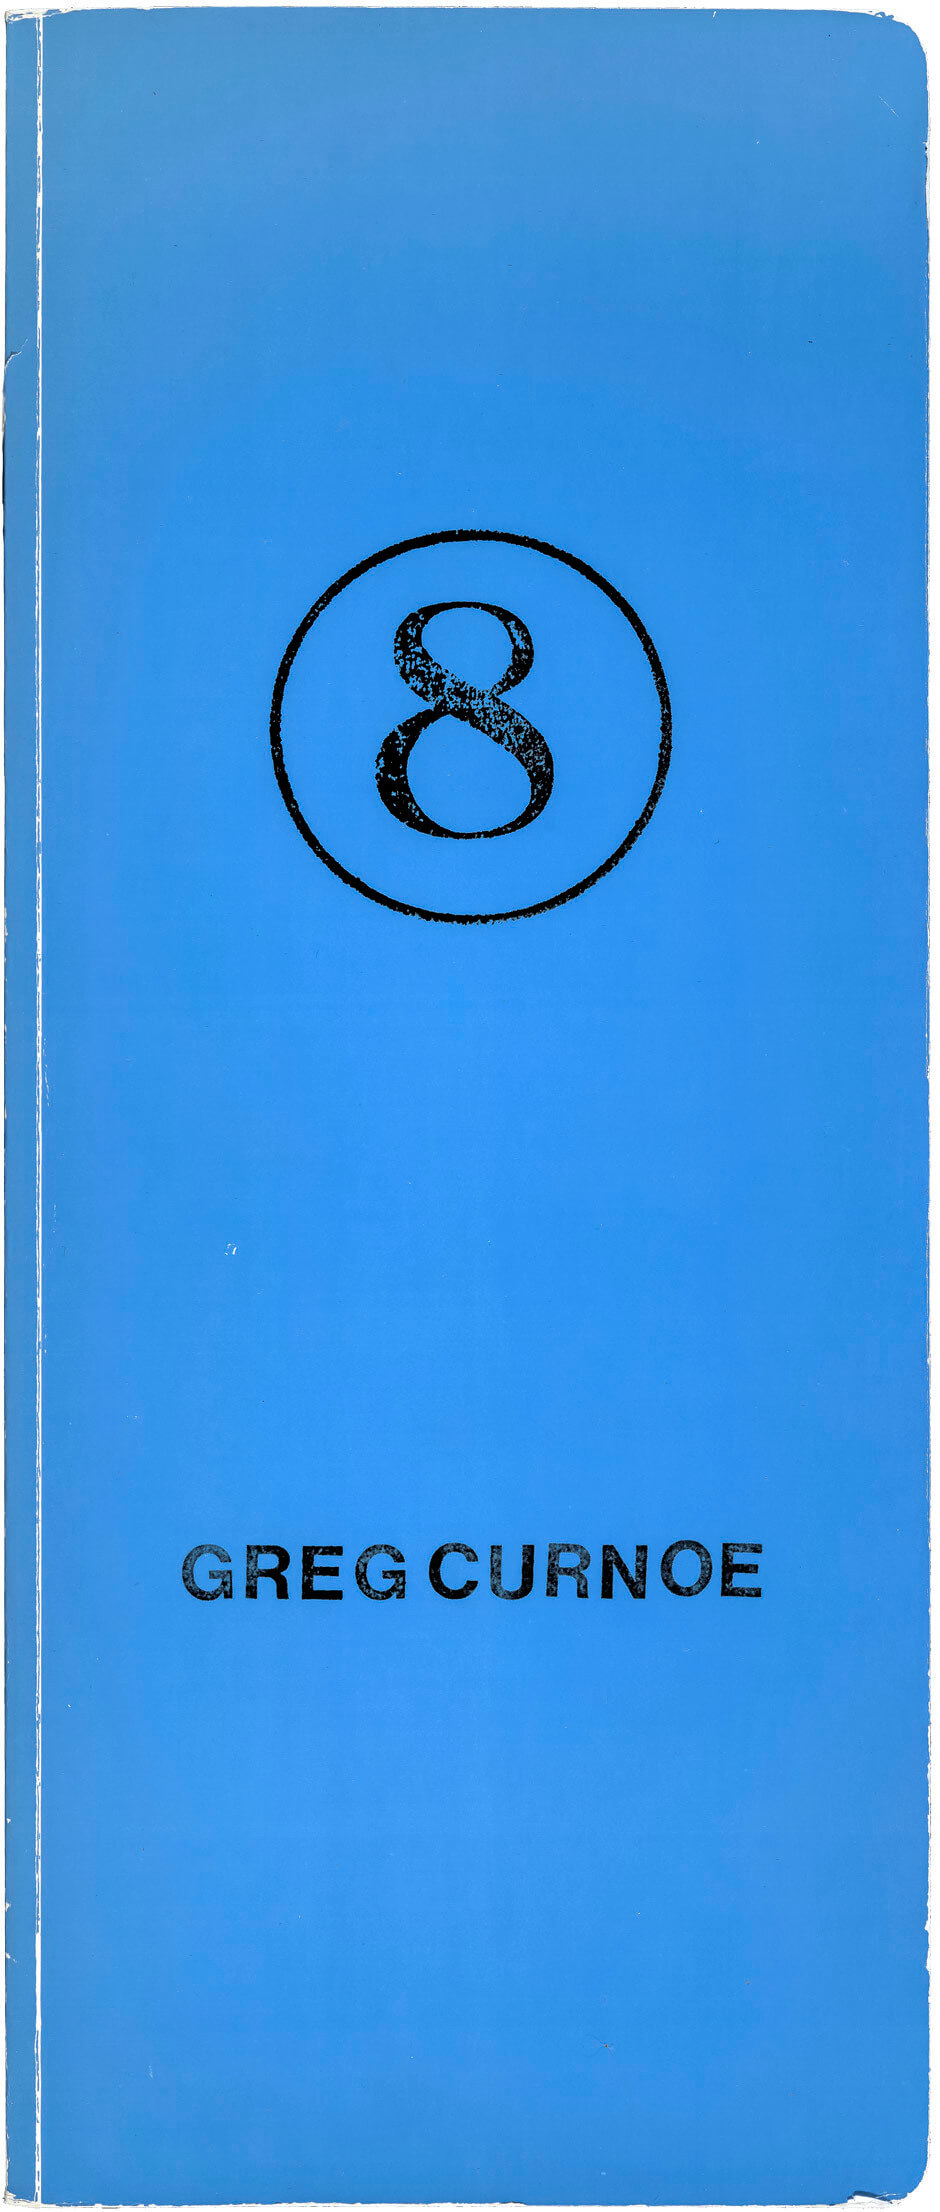 Art Canada Institute, Greg Curnoe, Cover of Greg Curnoe, Blue Book #8